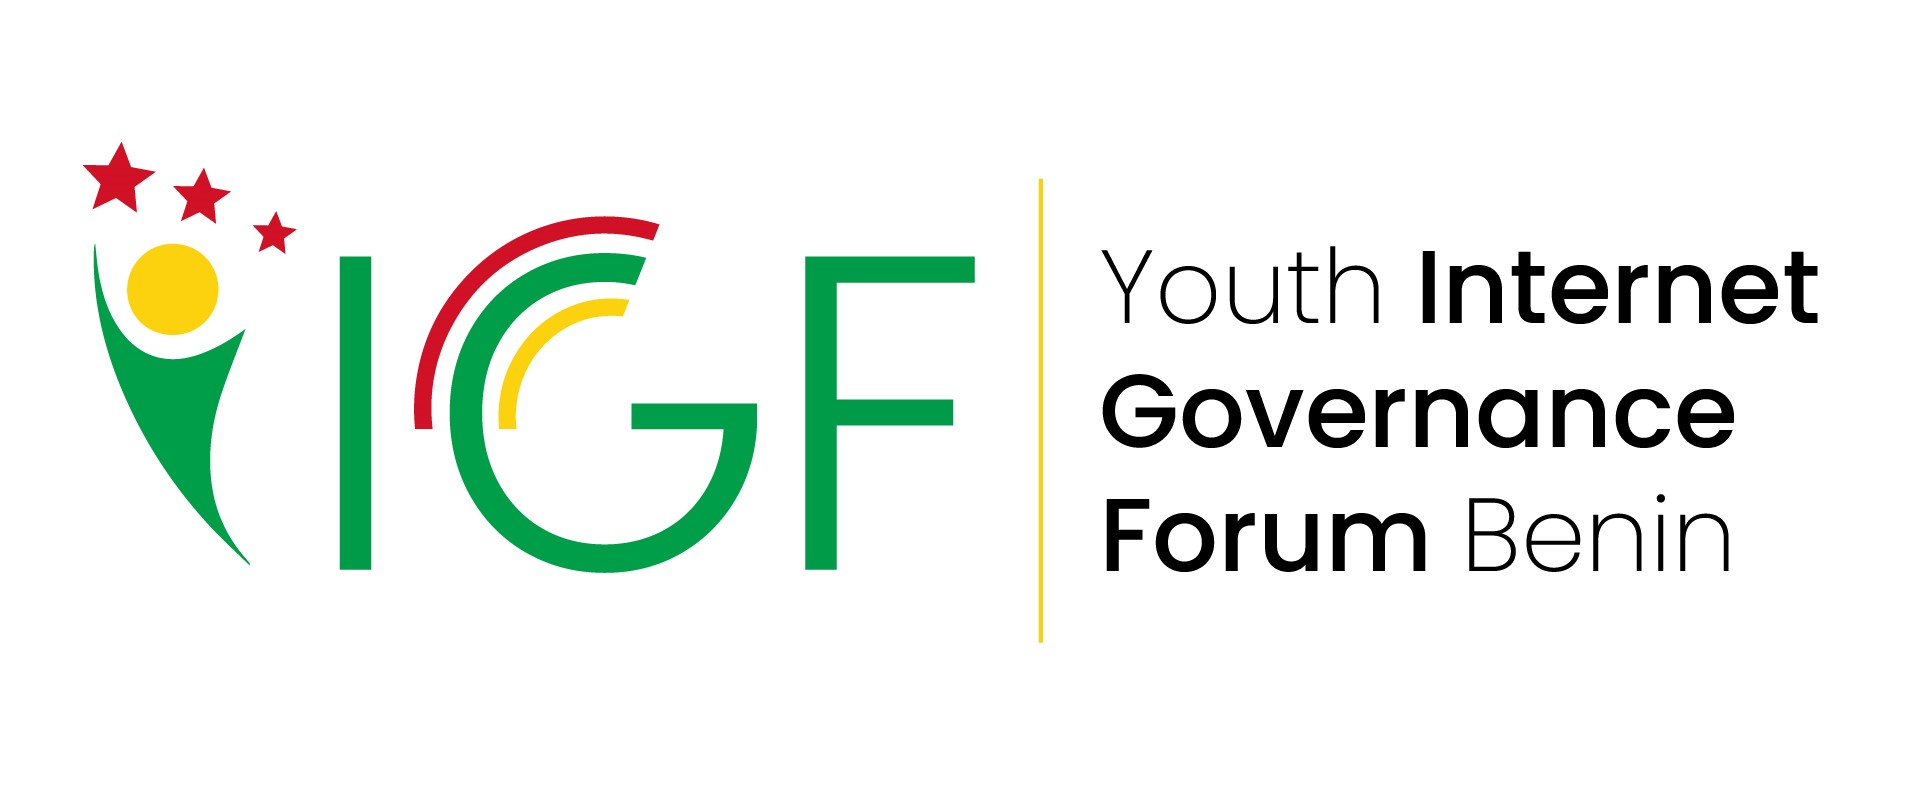 Benin Youth Internet Governance Forum